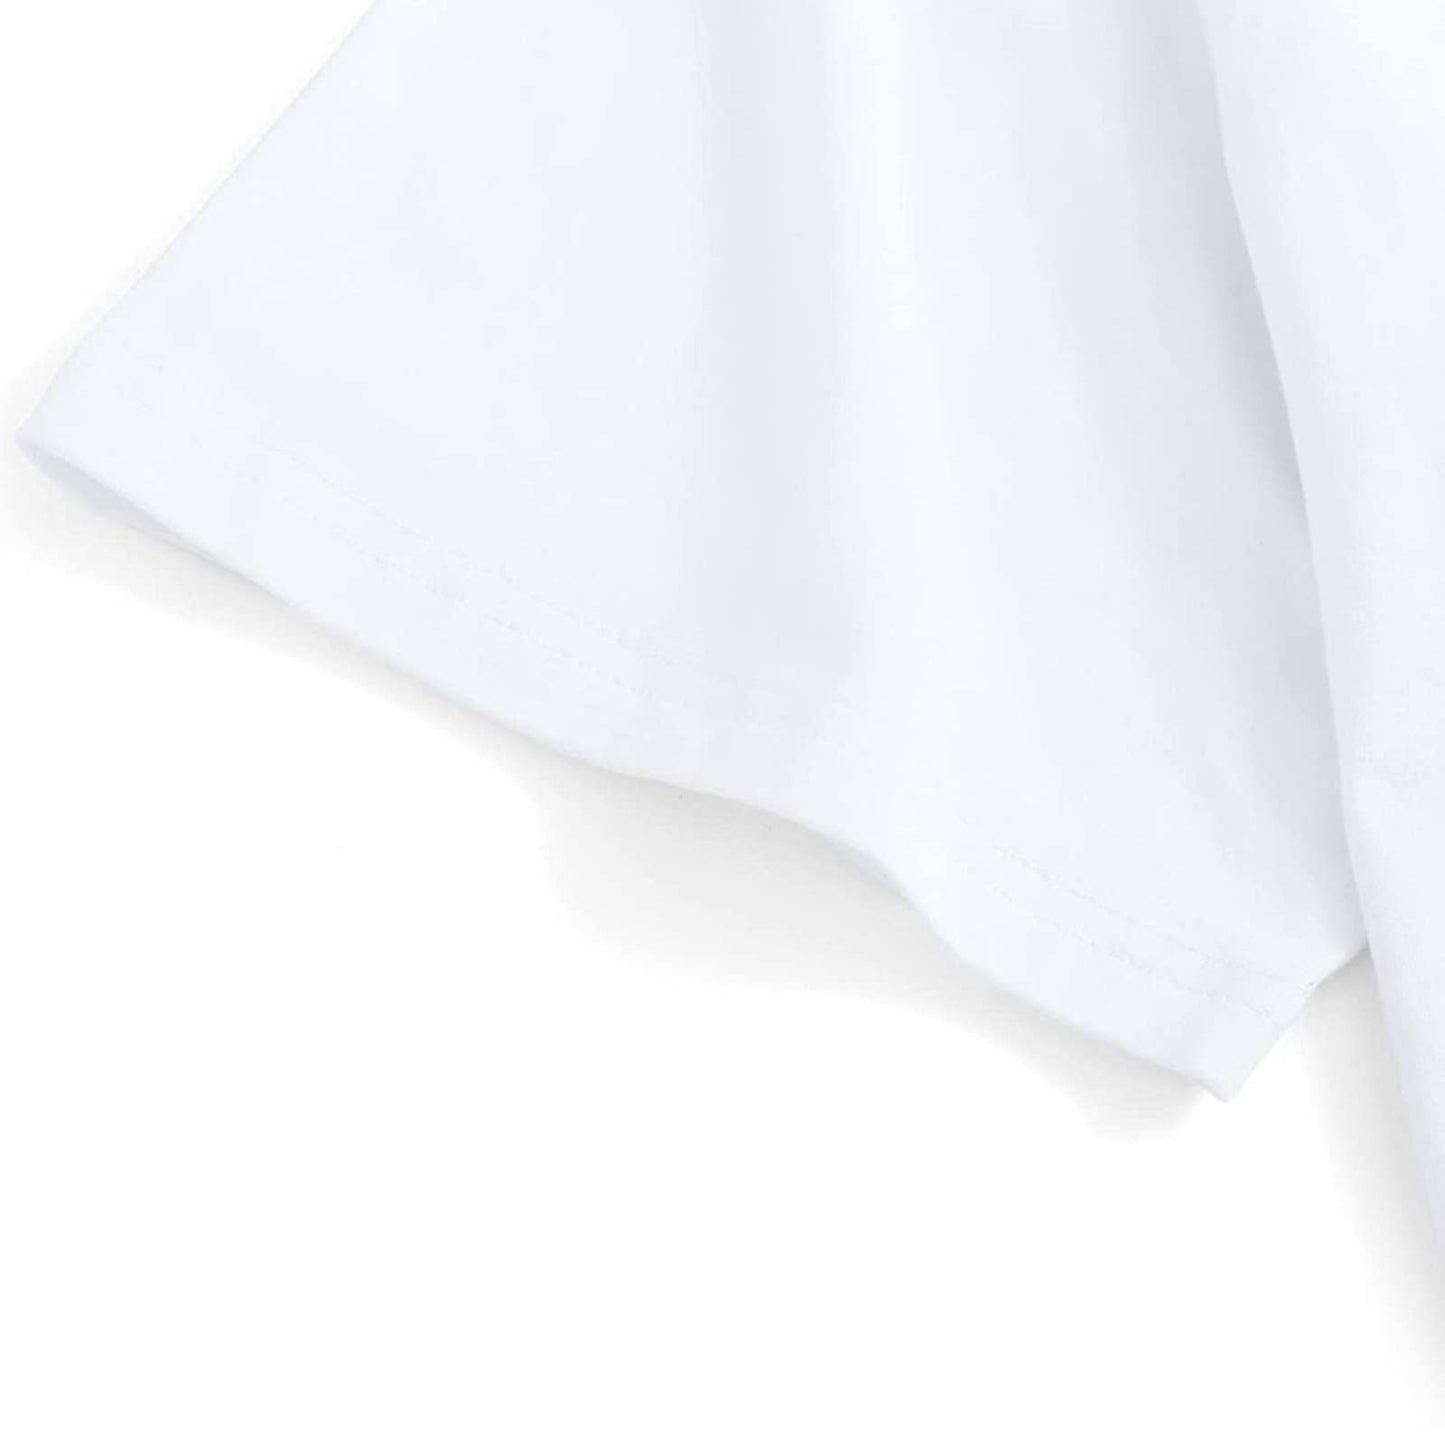 KESIHAN Men's Casual Cotton Spandex Striped Crewneck T-Shirt 2XL